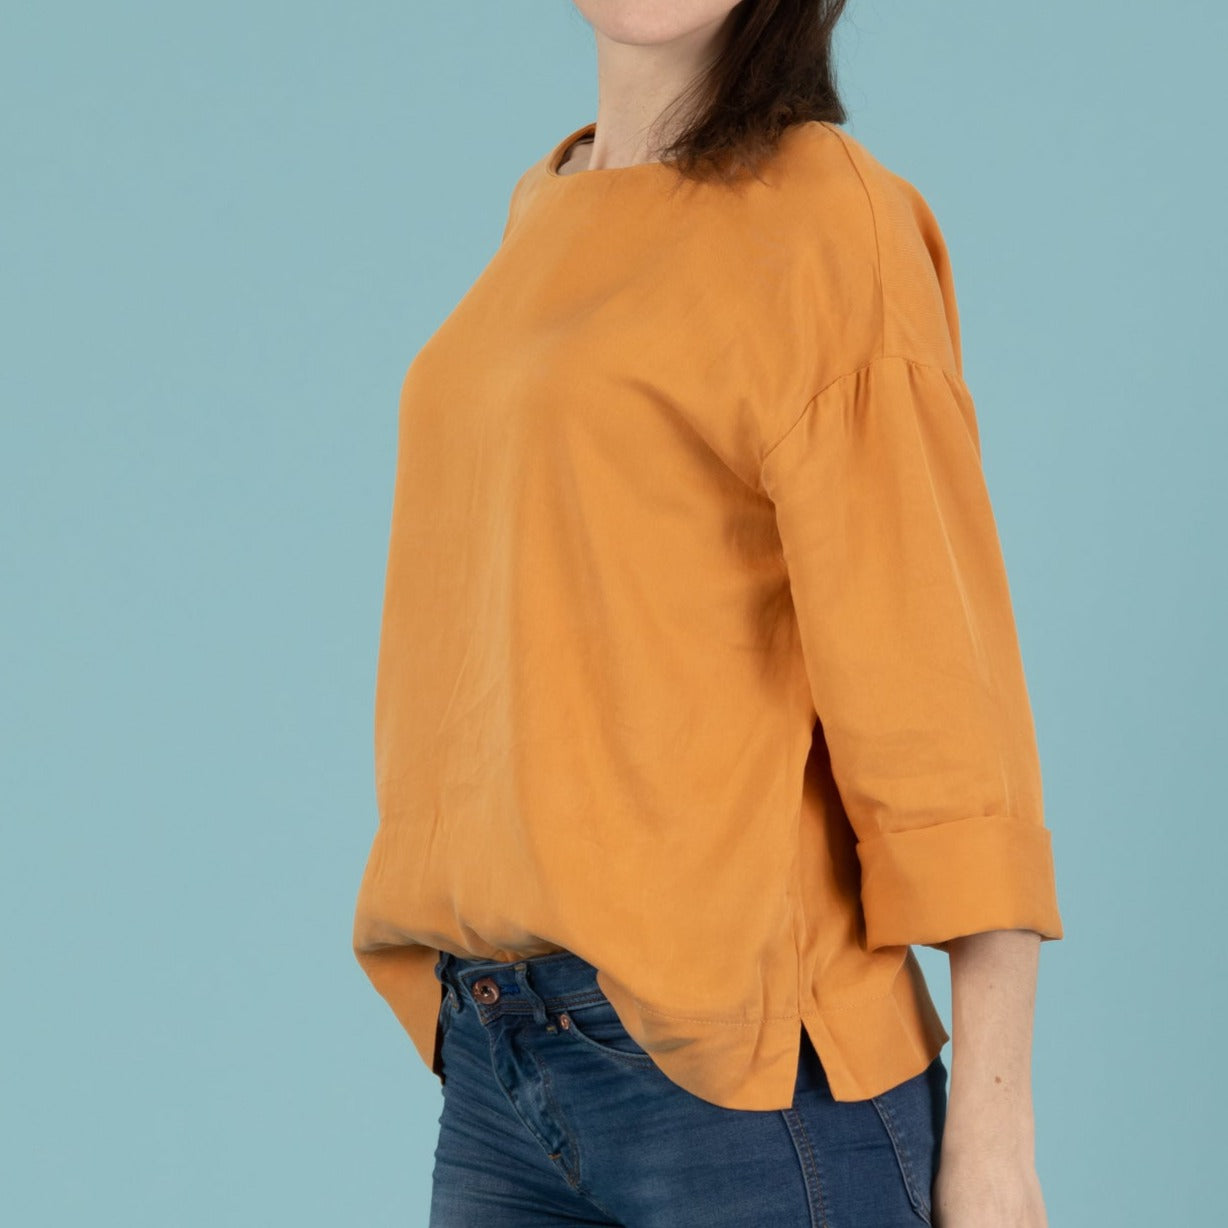 Tencel Damenshirt in der Farbe Mango, Urheber: Mini & Eve